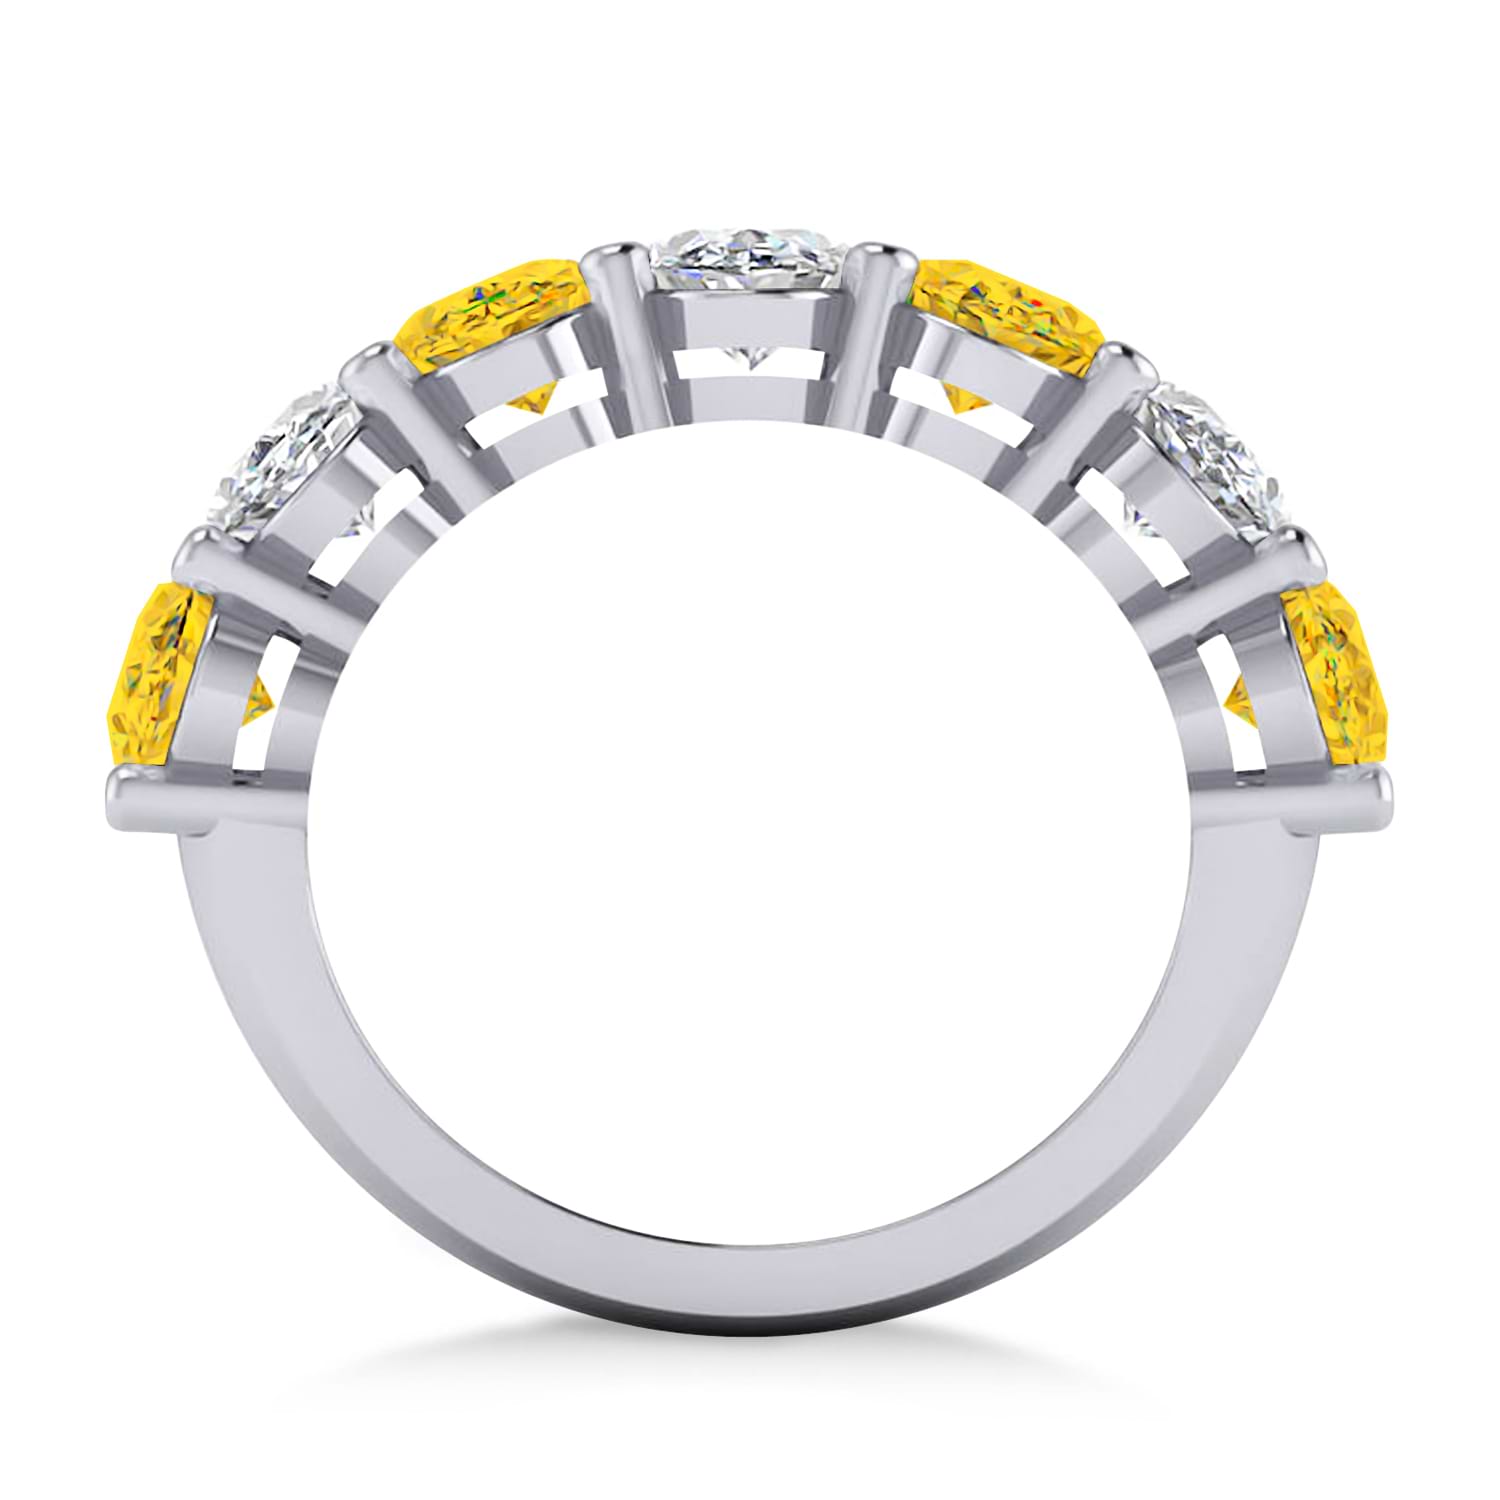 Oval Diamond & Yellow Sapphire Seven Stone Ring 14k White Gold (7.00ct)